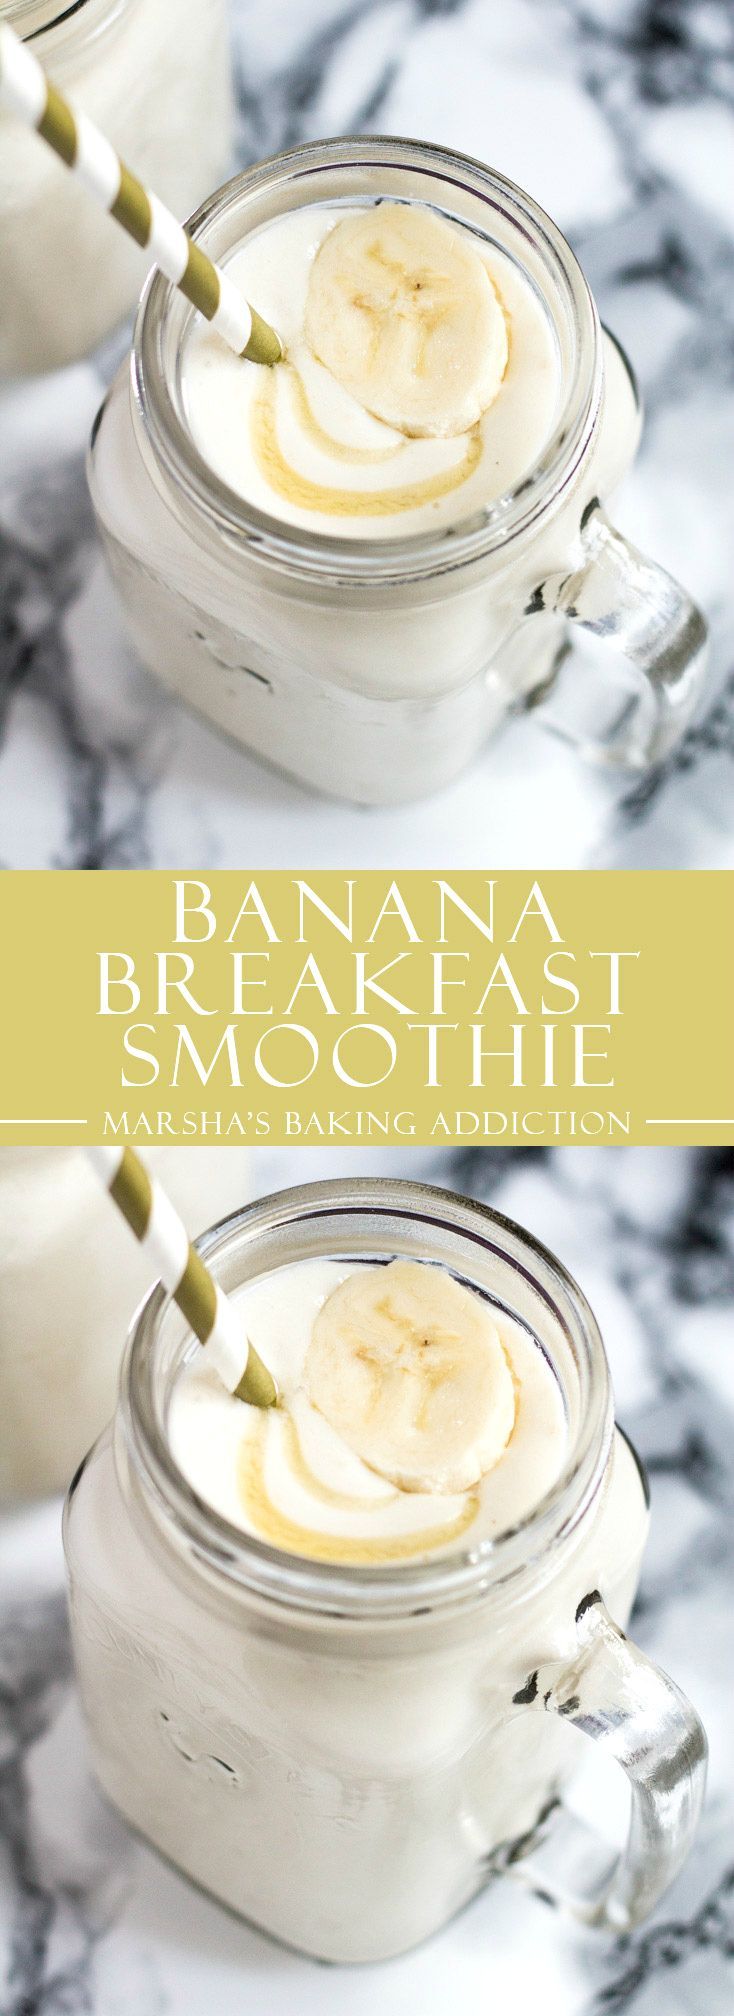 Banana Breakfast Smoothie | marshasbakingaddiction.com @marshasbakeblog -   24 breakfast smoothie recipes
 ideas